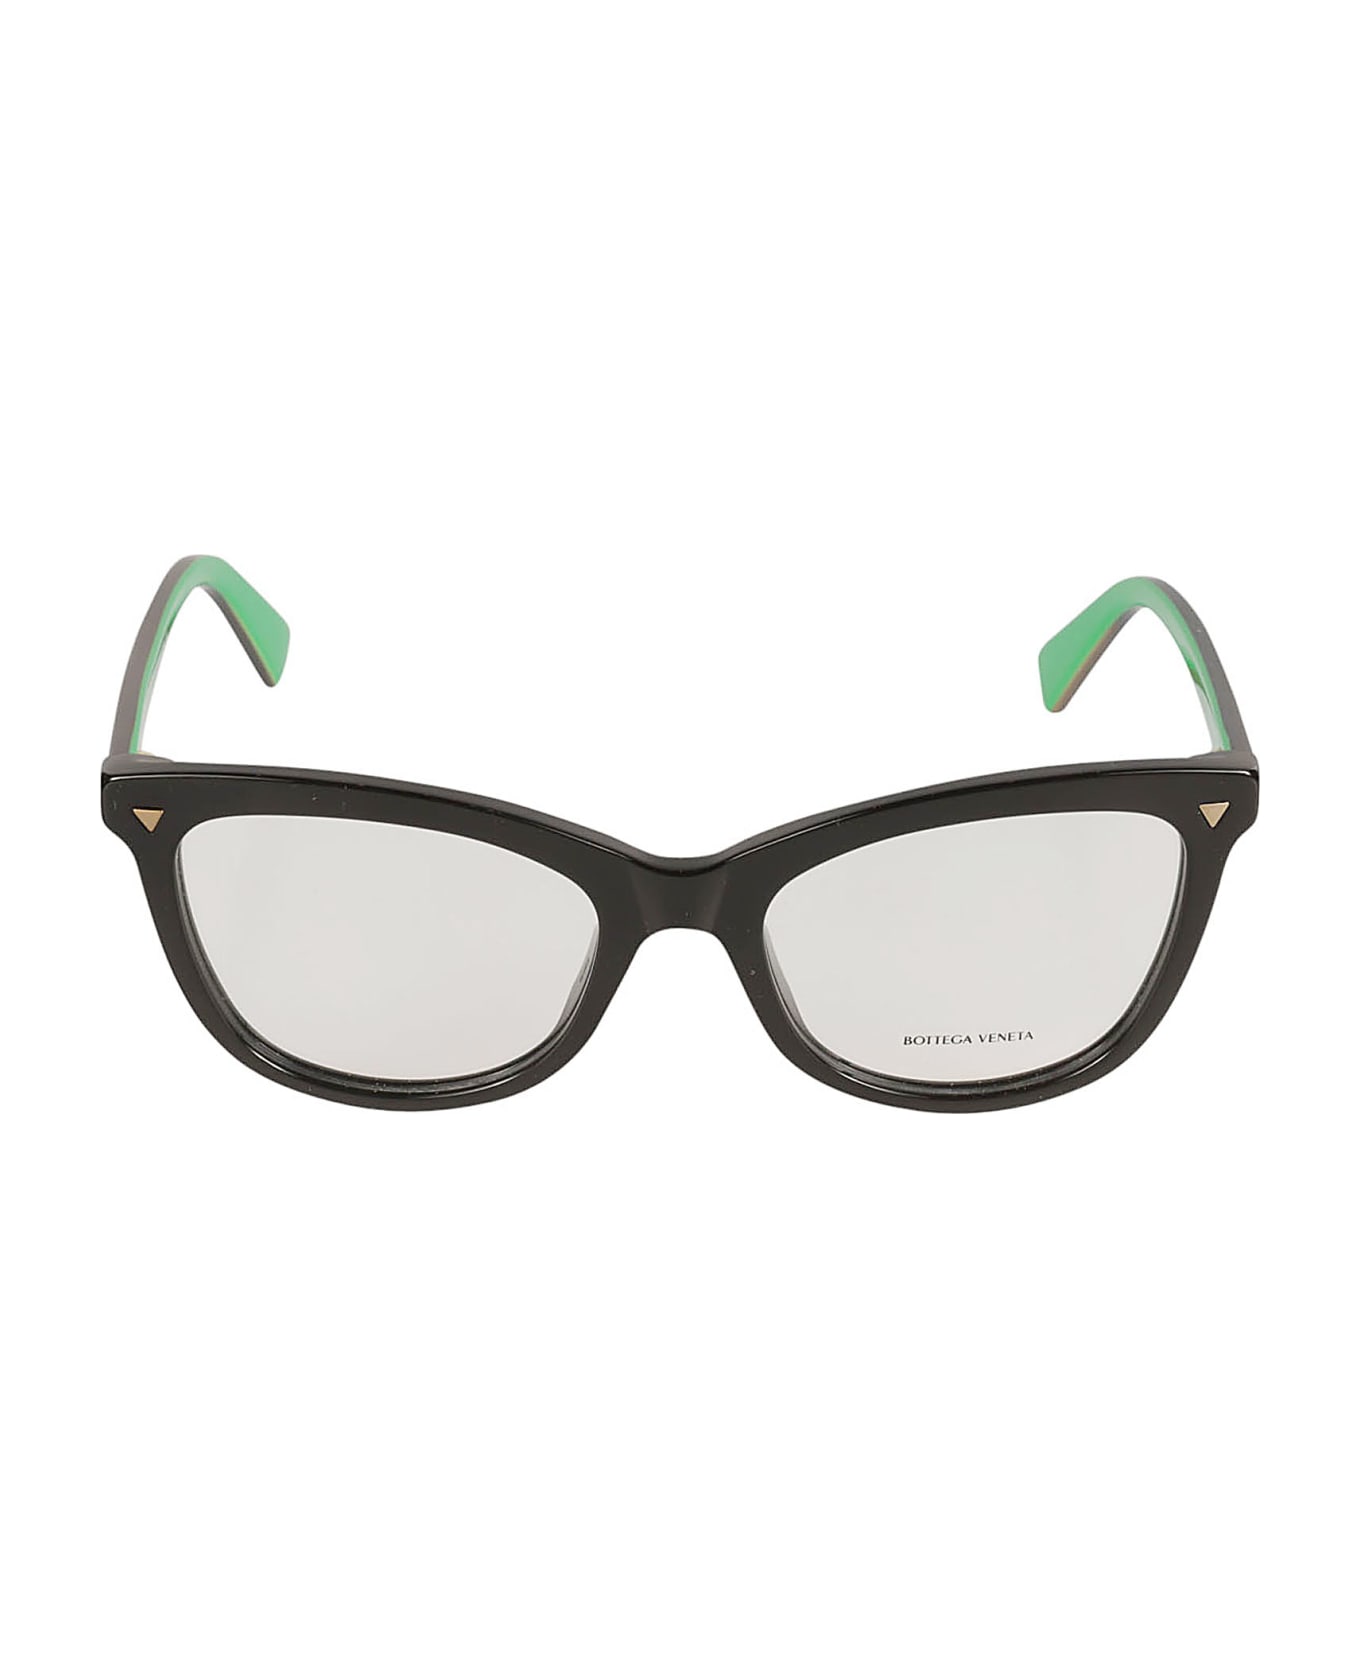 Bottega Veneta Eyewear Square Frame Logo Glasses - Black/Transparent アイウェア